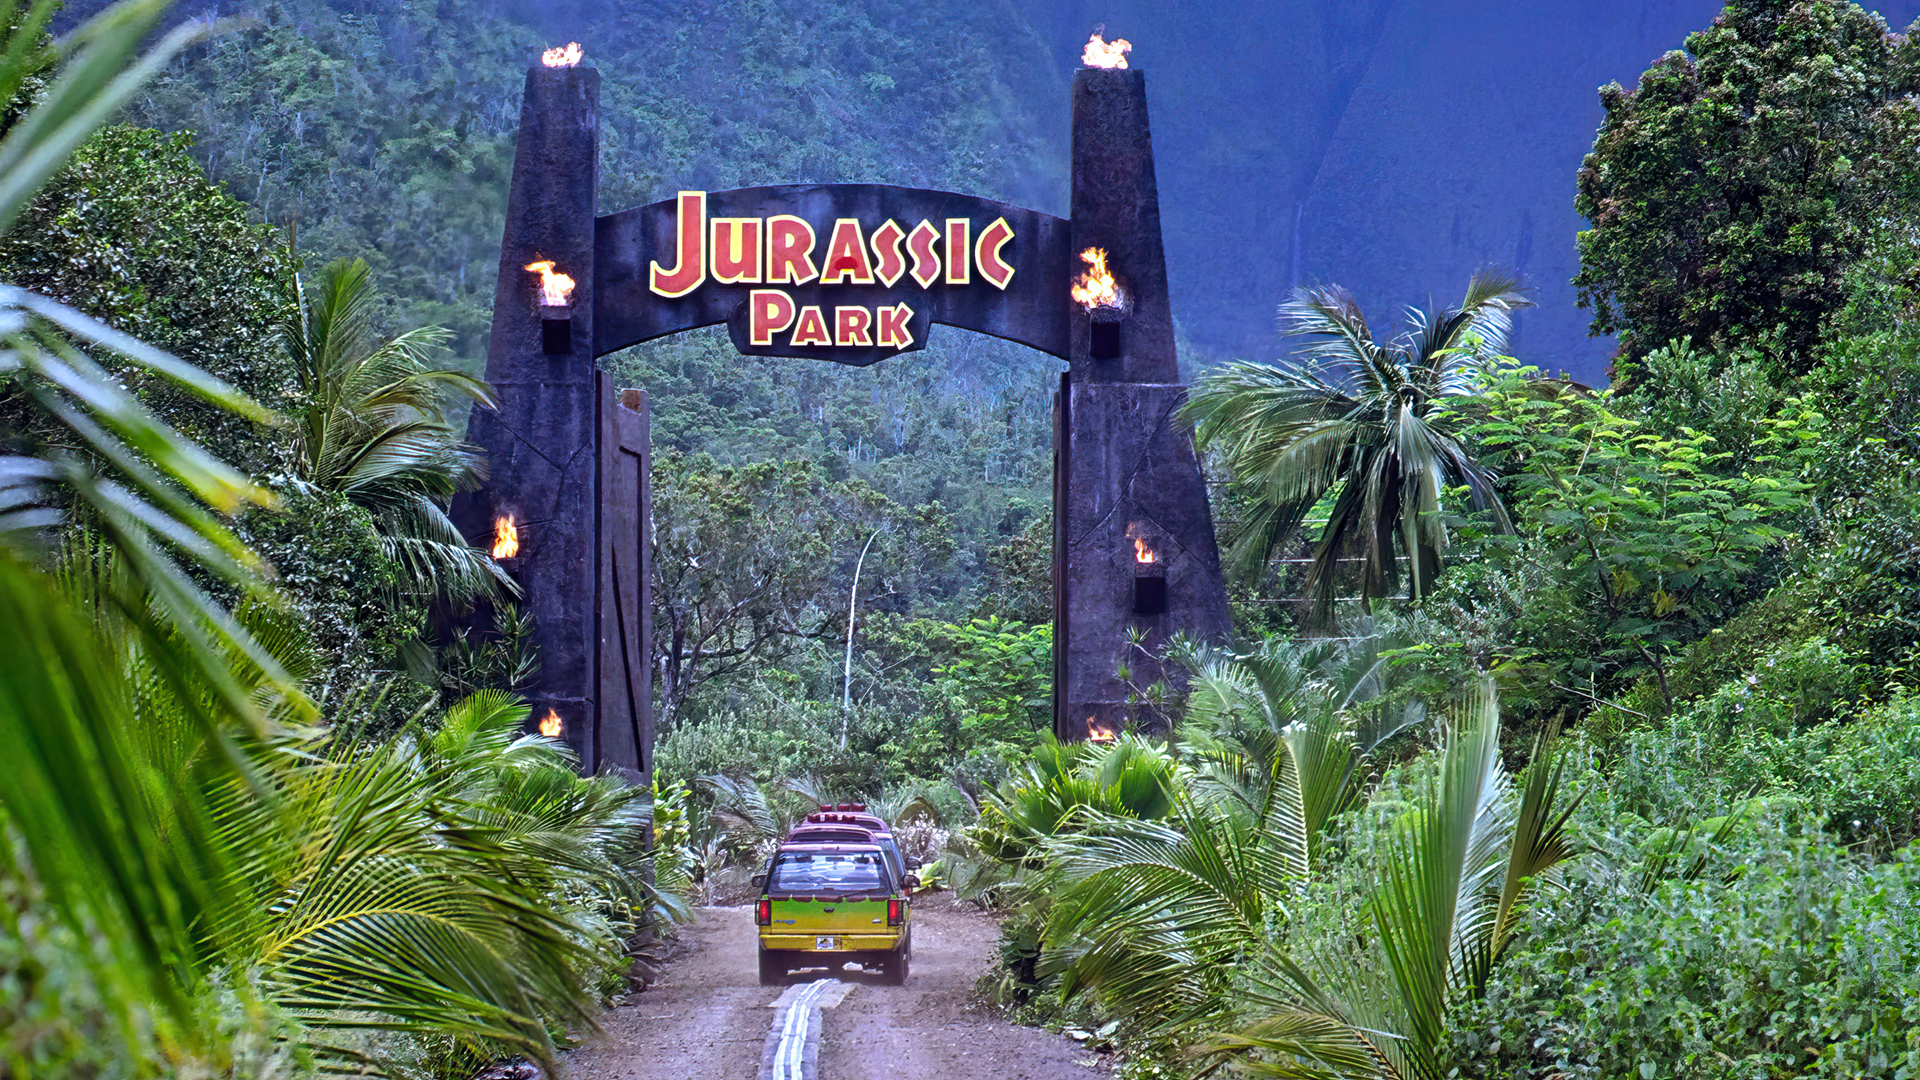 General 1920x1080 Jurassic Park jungle movies film stills car signs logo plants palm trees gates torches